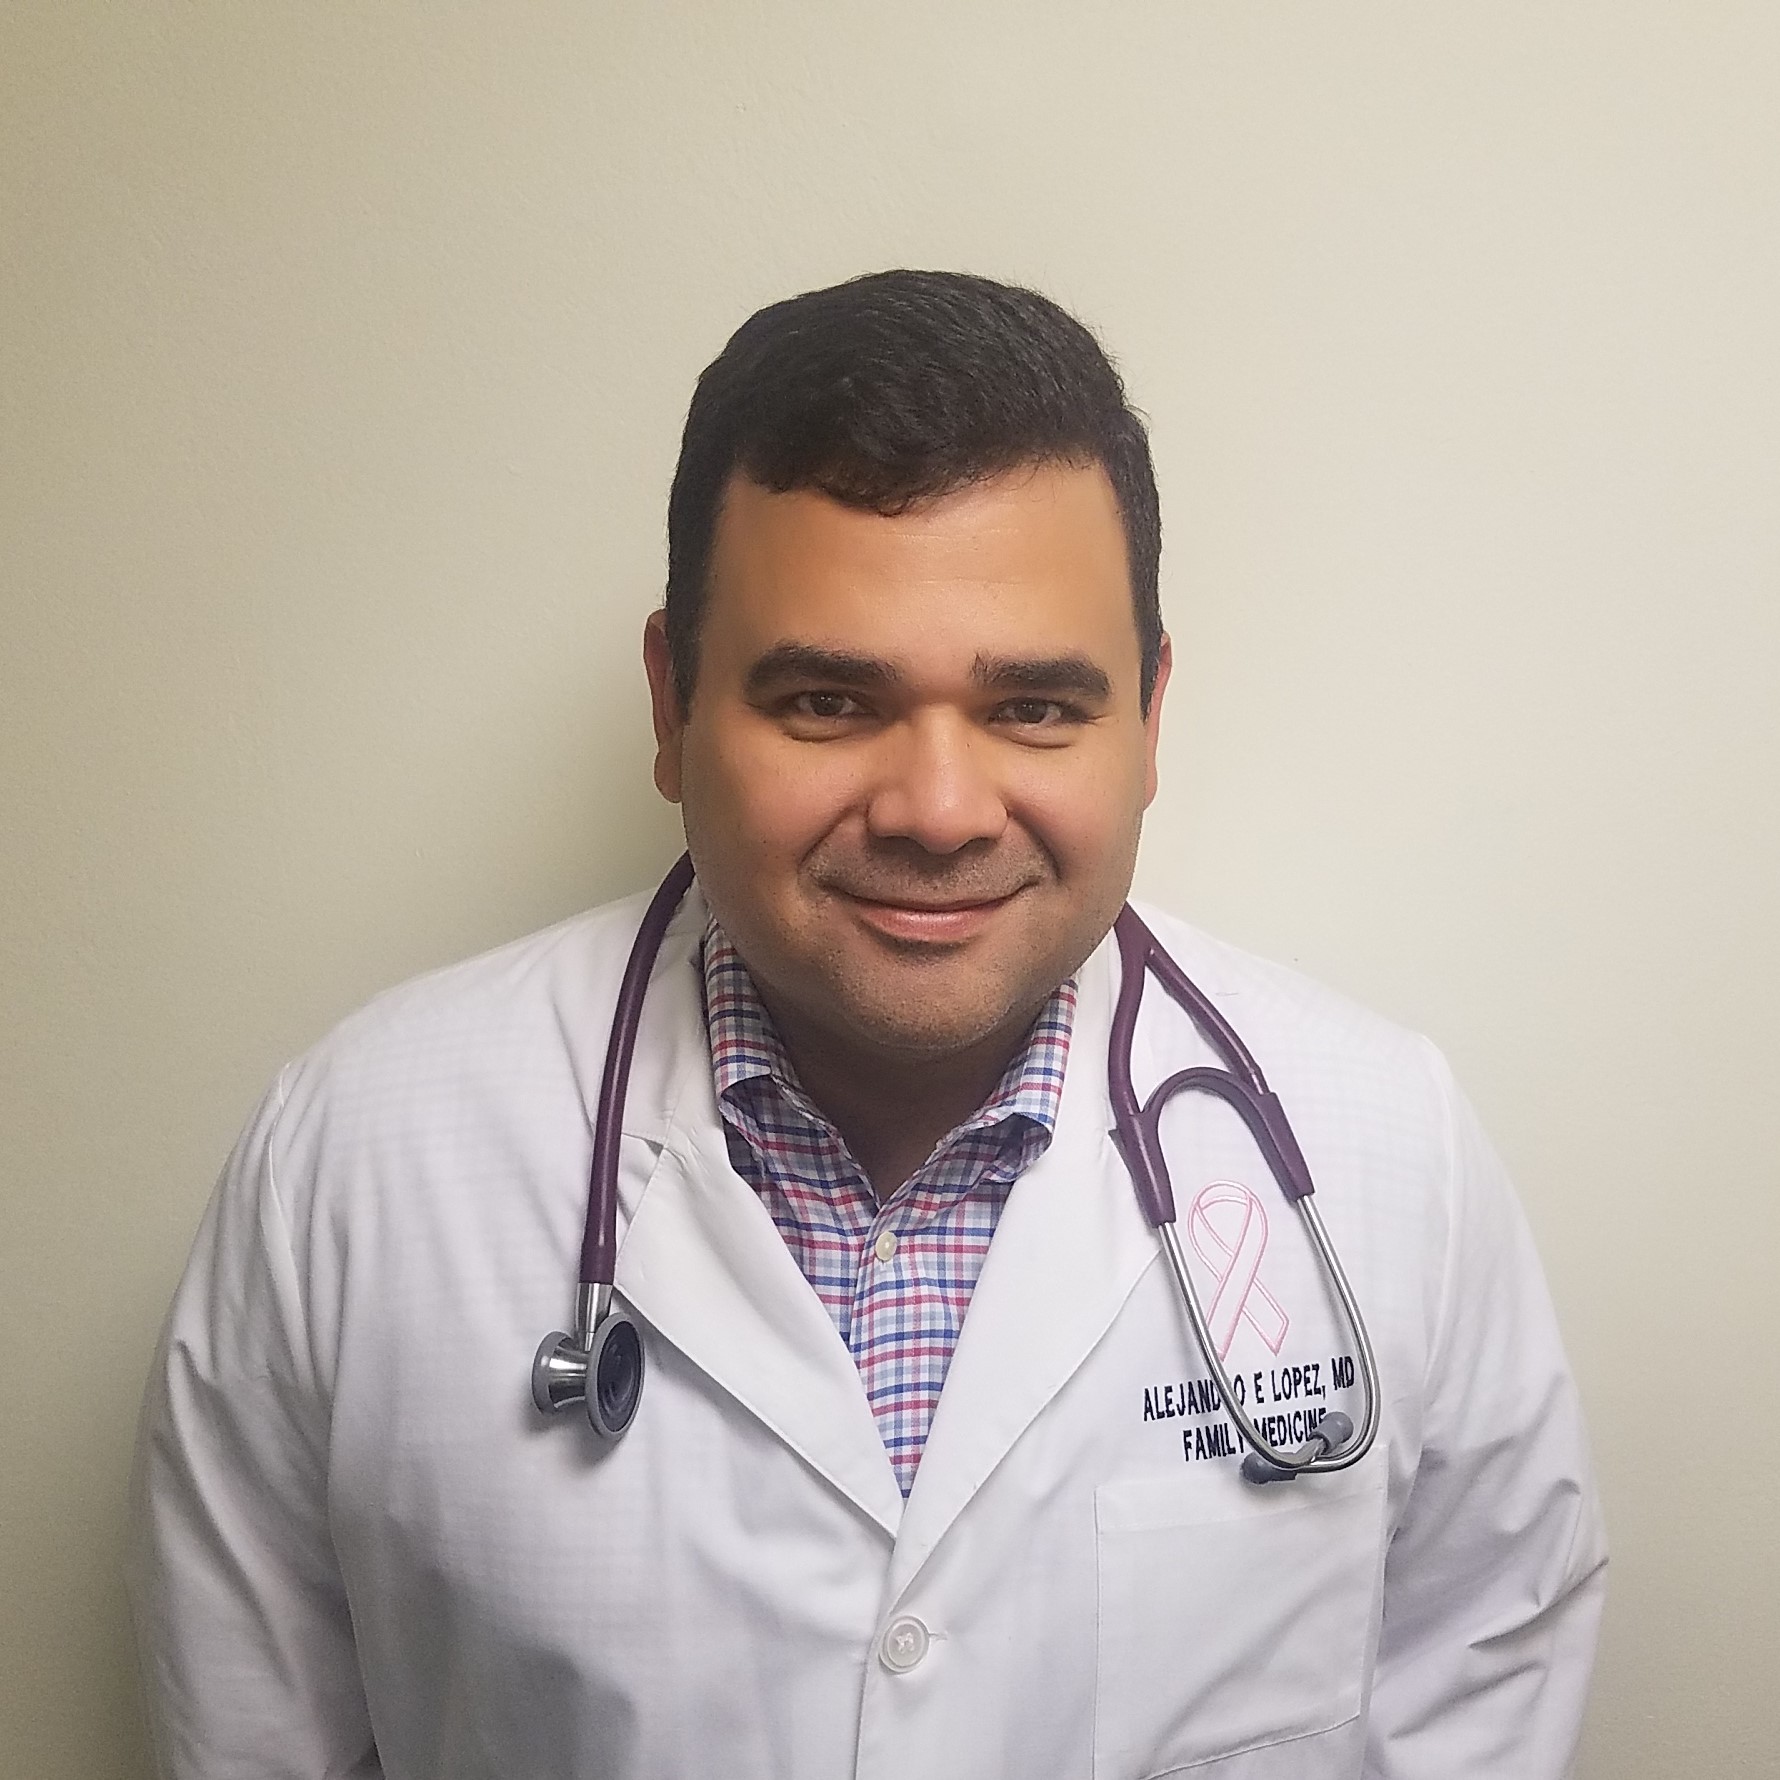 Dr. Alejandro E. Lopez MD, Family Practitioner